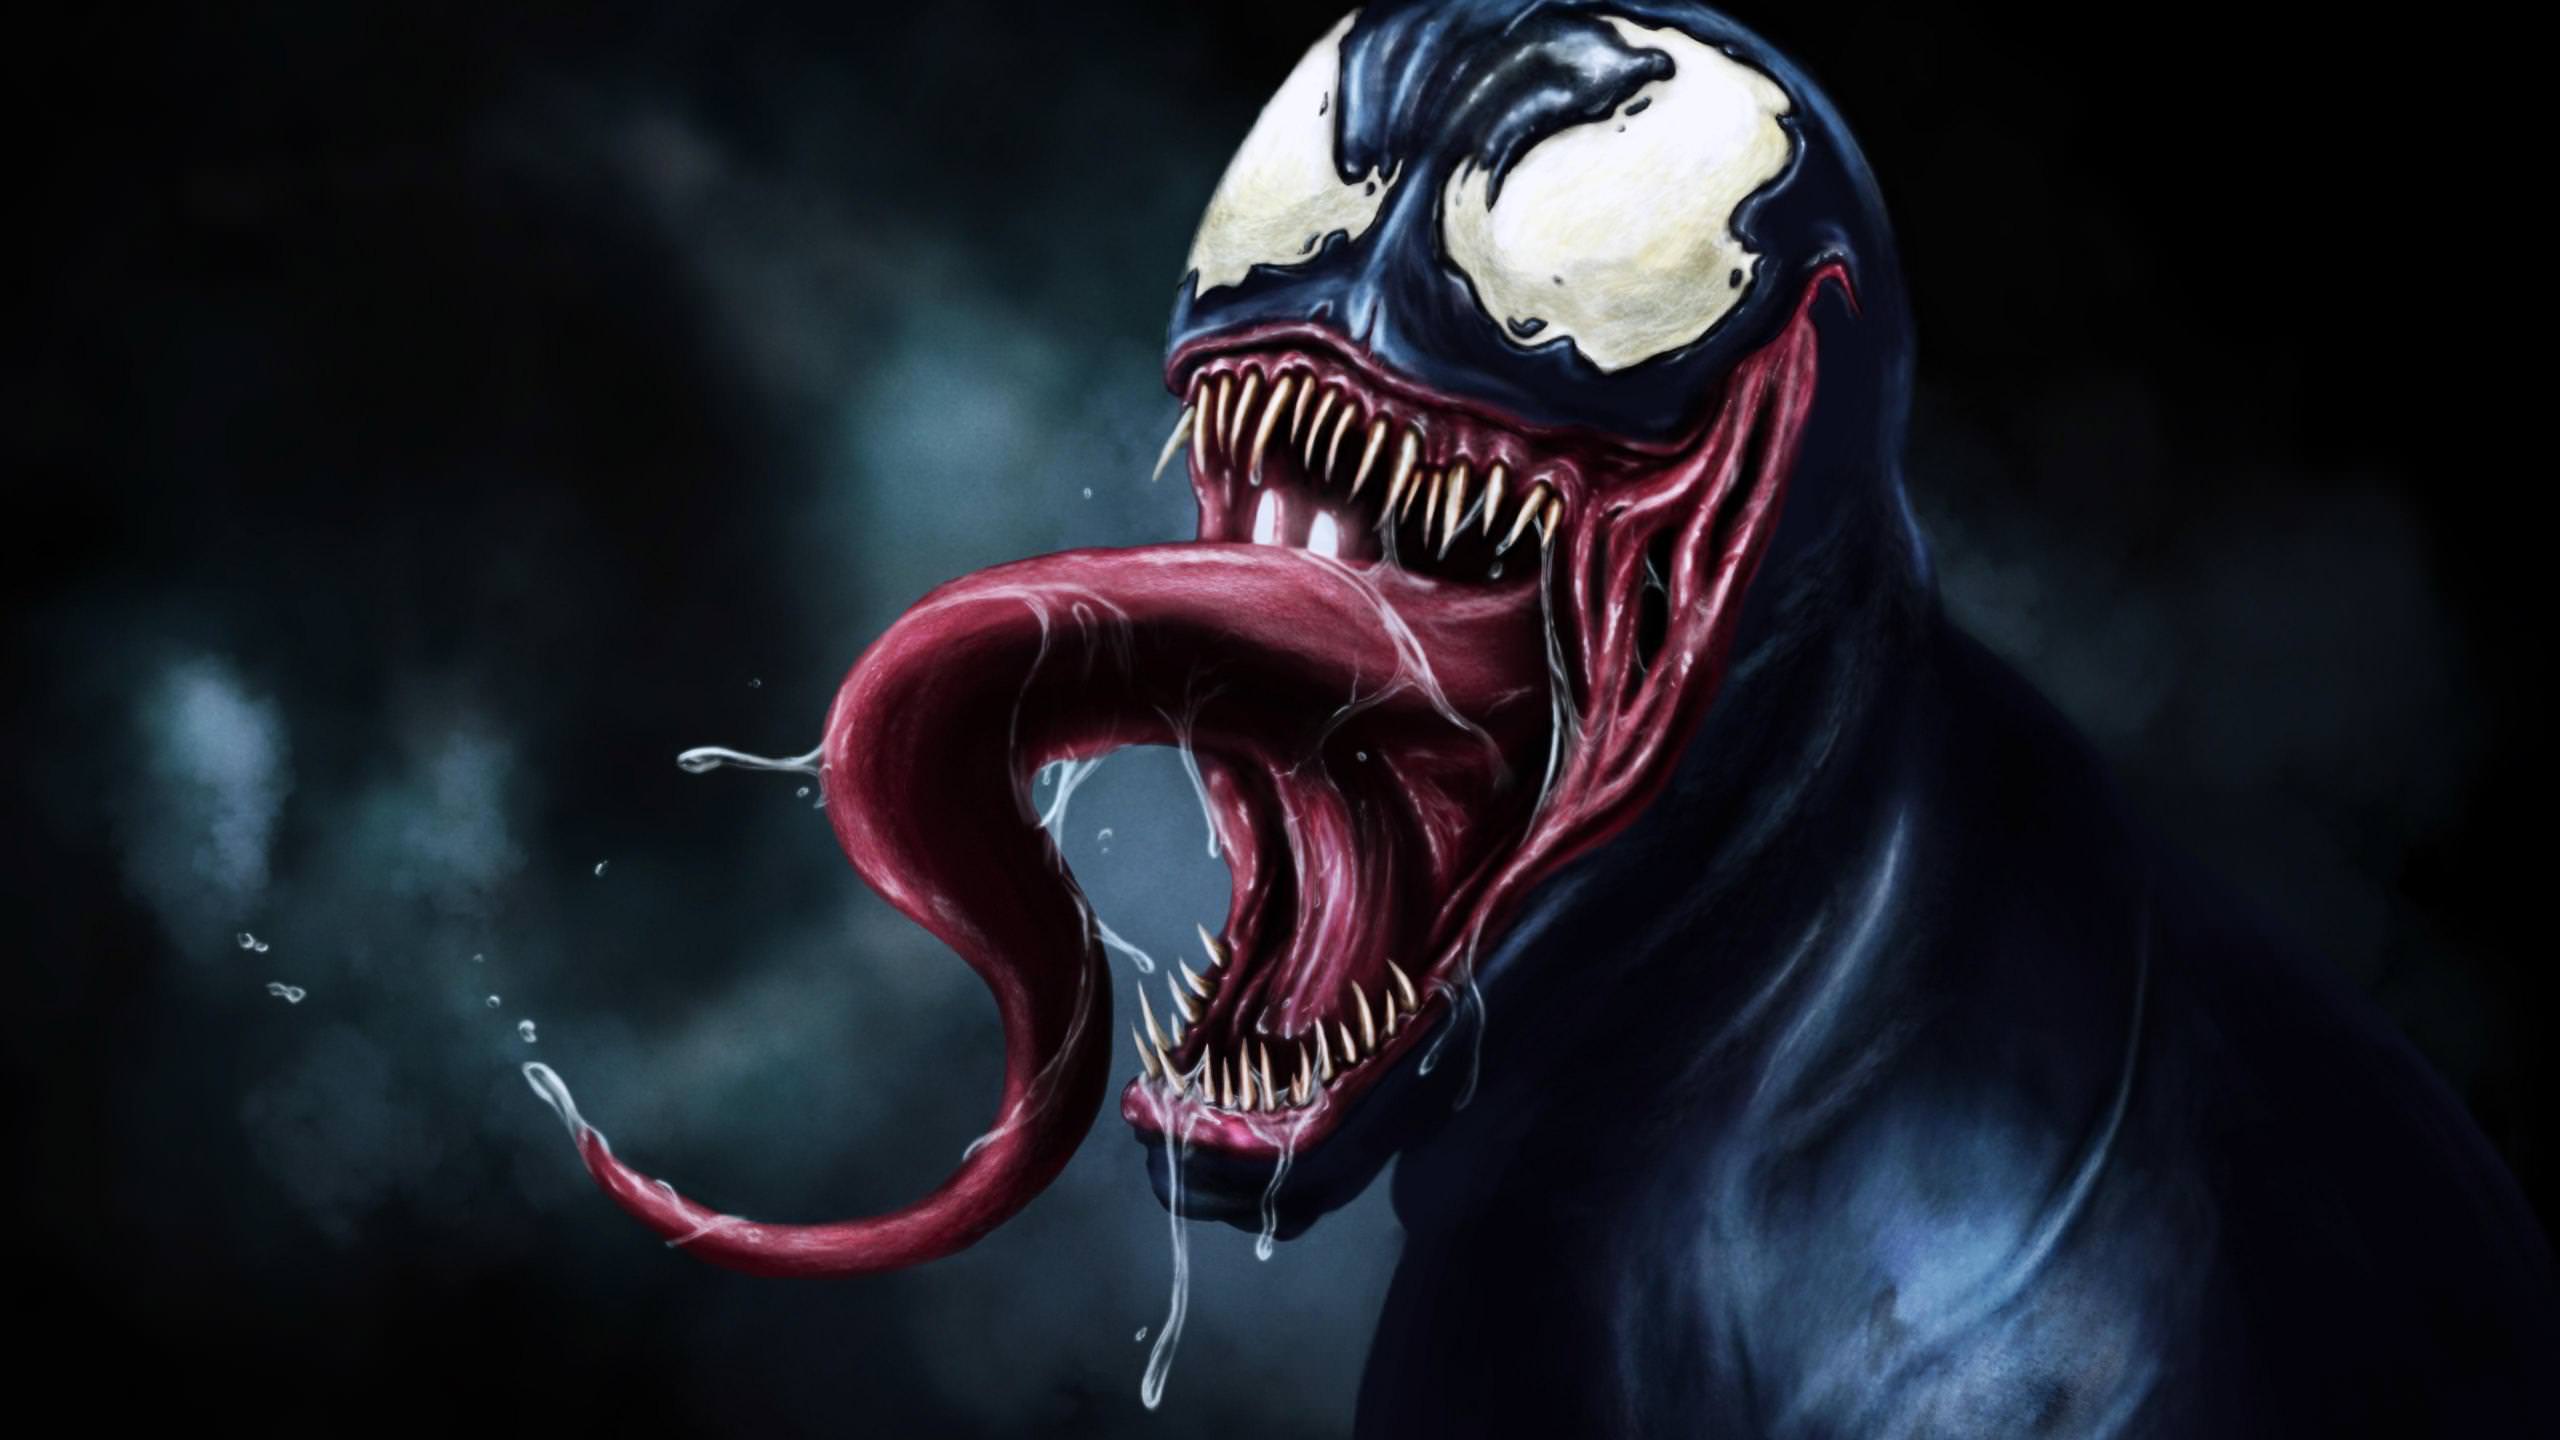 Download Wallpaper Venom Hd